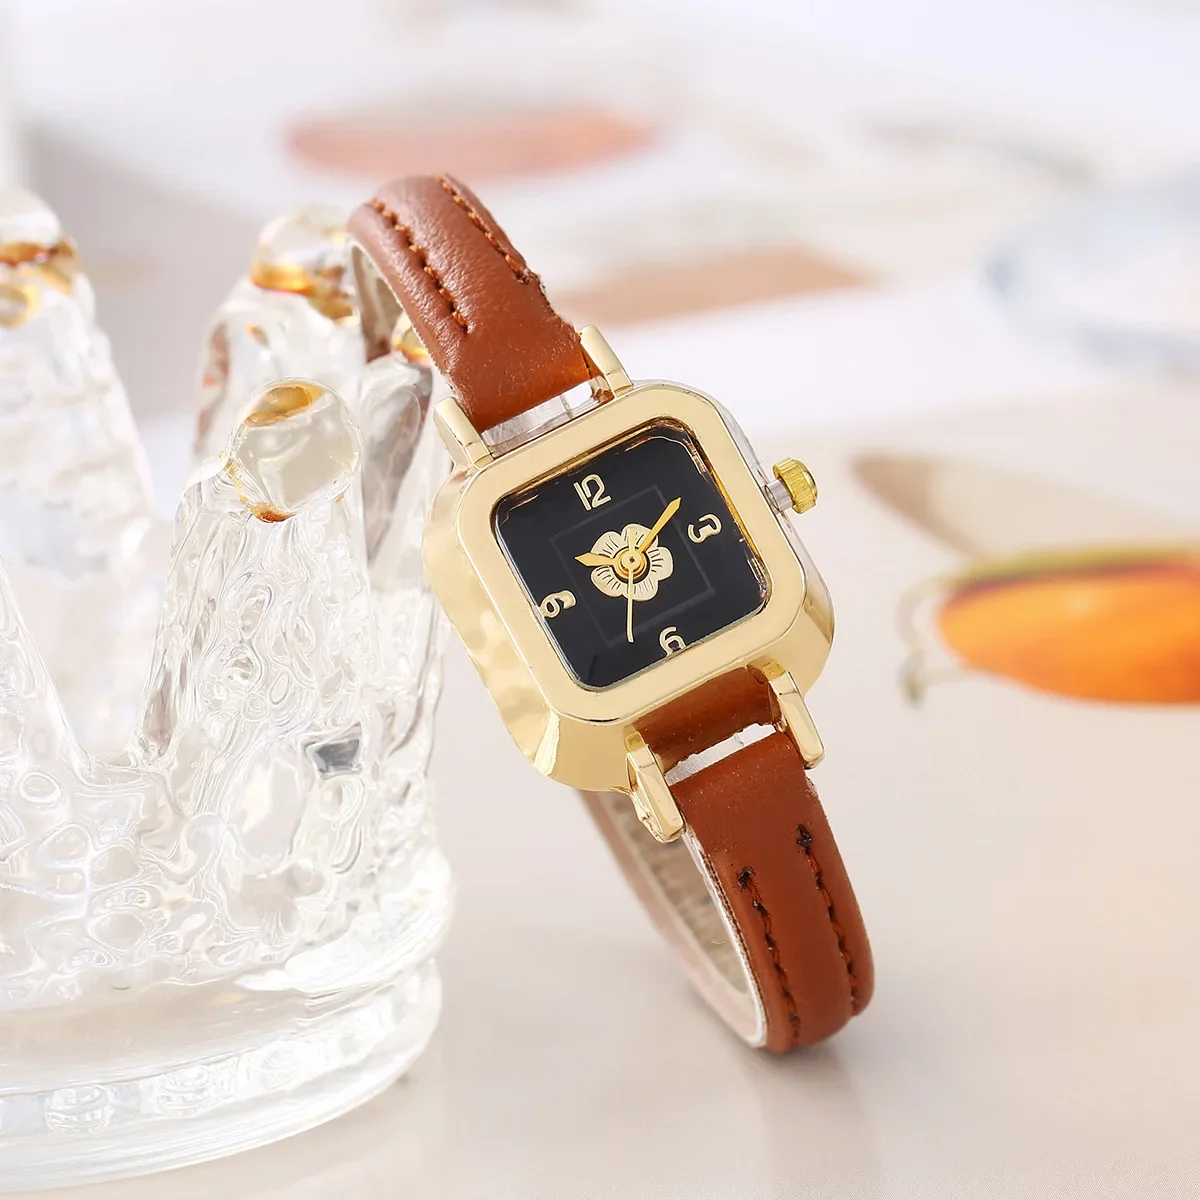 

Luxury Brand Women Watch Leather Strap Wristwatch Quartz Watches for Women Clock Gift Reloj Mujer Relogio Feminino Montre Femme